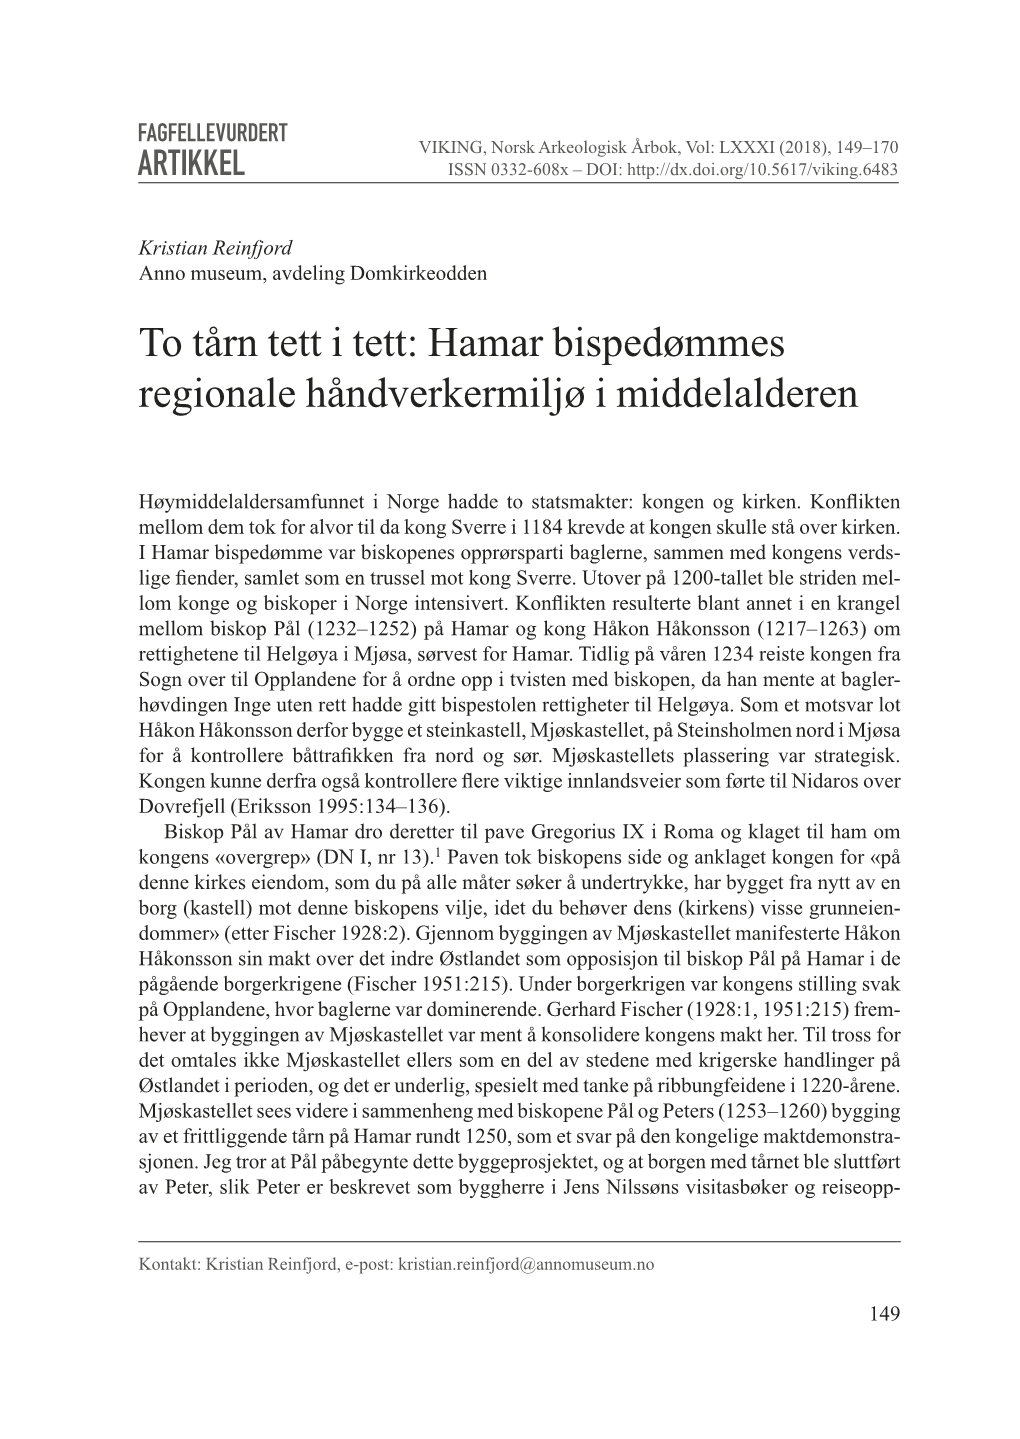 Hamar Bispedømmes Regionale Håndverkermiljø I Middelalderen